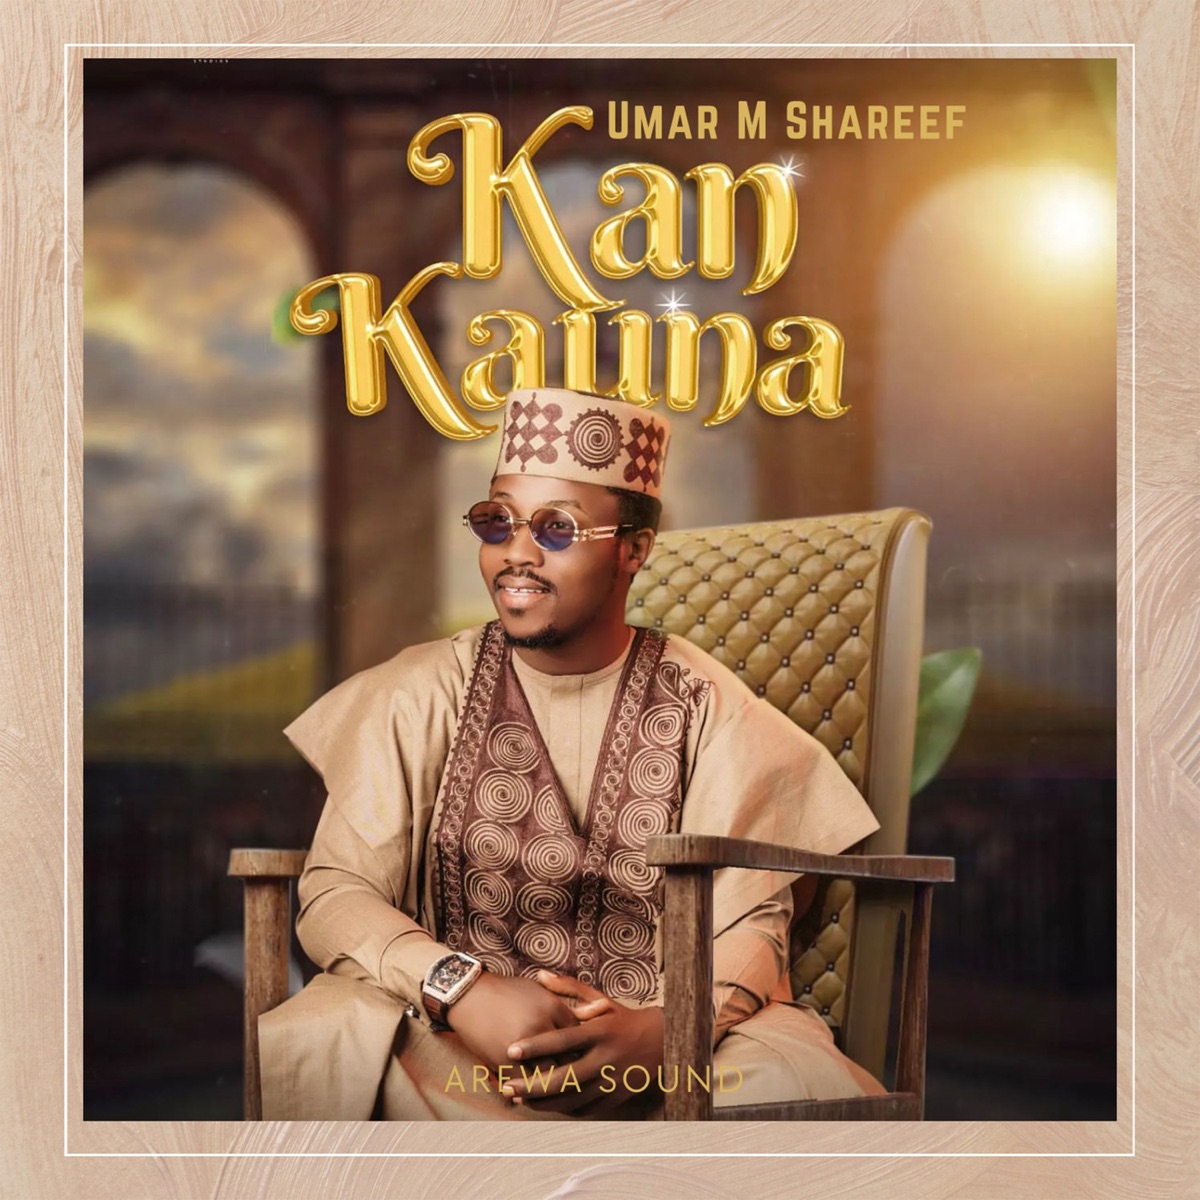 Umar M Shareef (Rayuwata) - Single by Arewa Sound on Apple Music